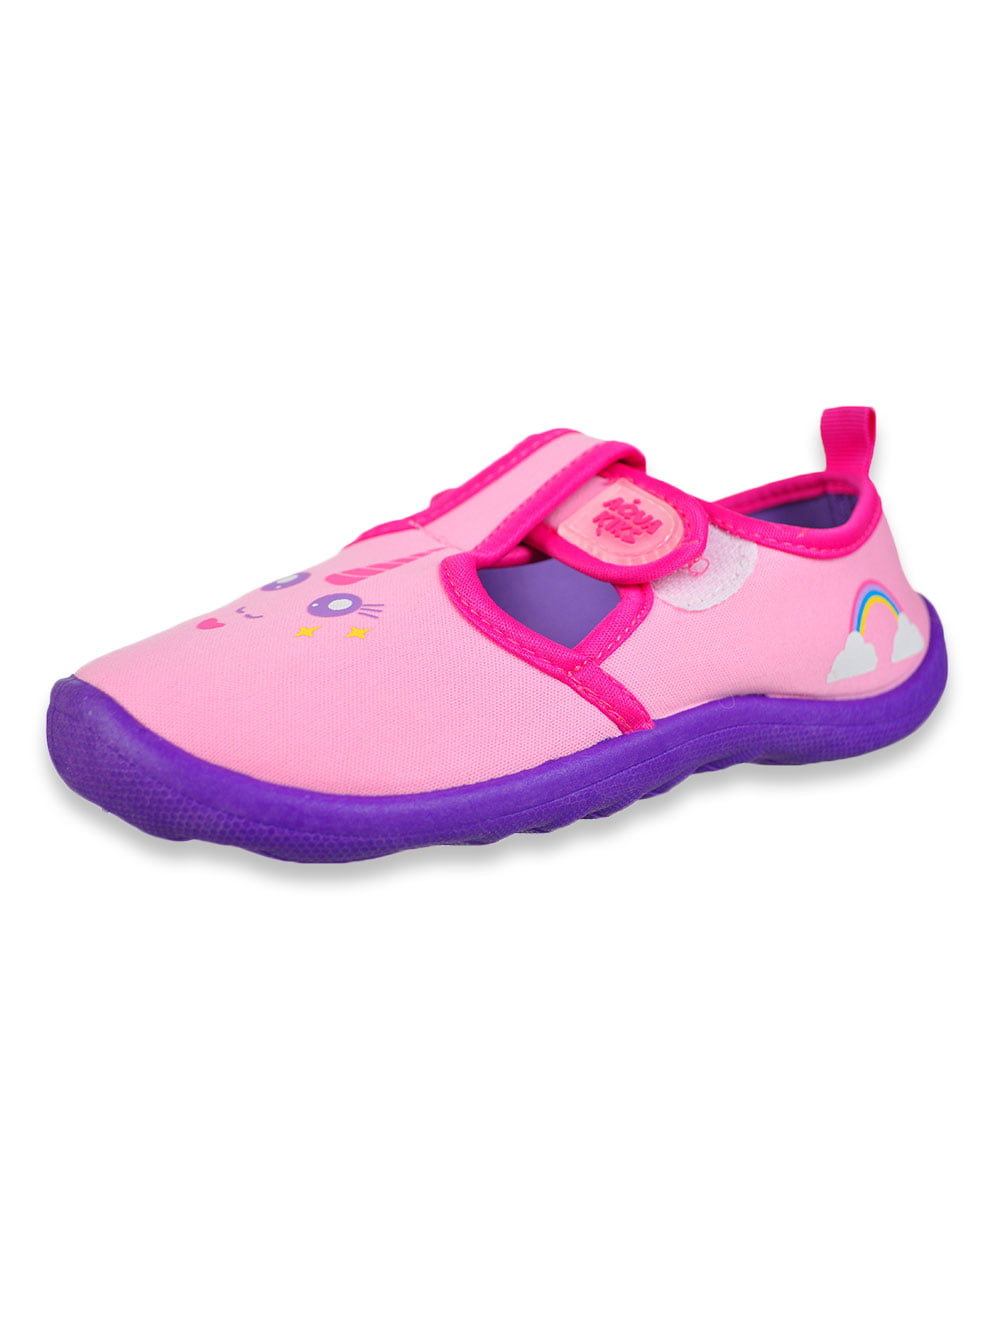 Kids Waterproof Sandals Aquakiks Water Aqua Shoes for Boys & Girls